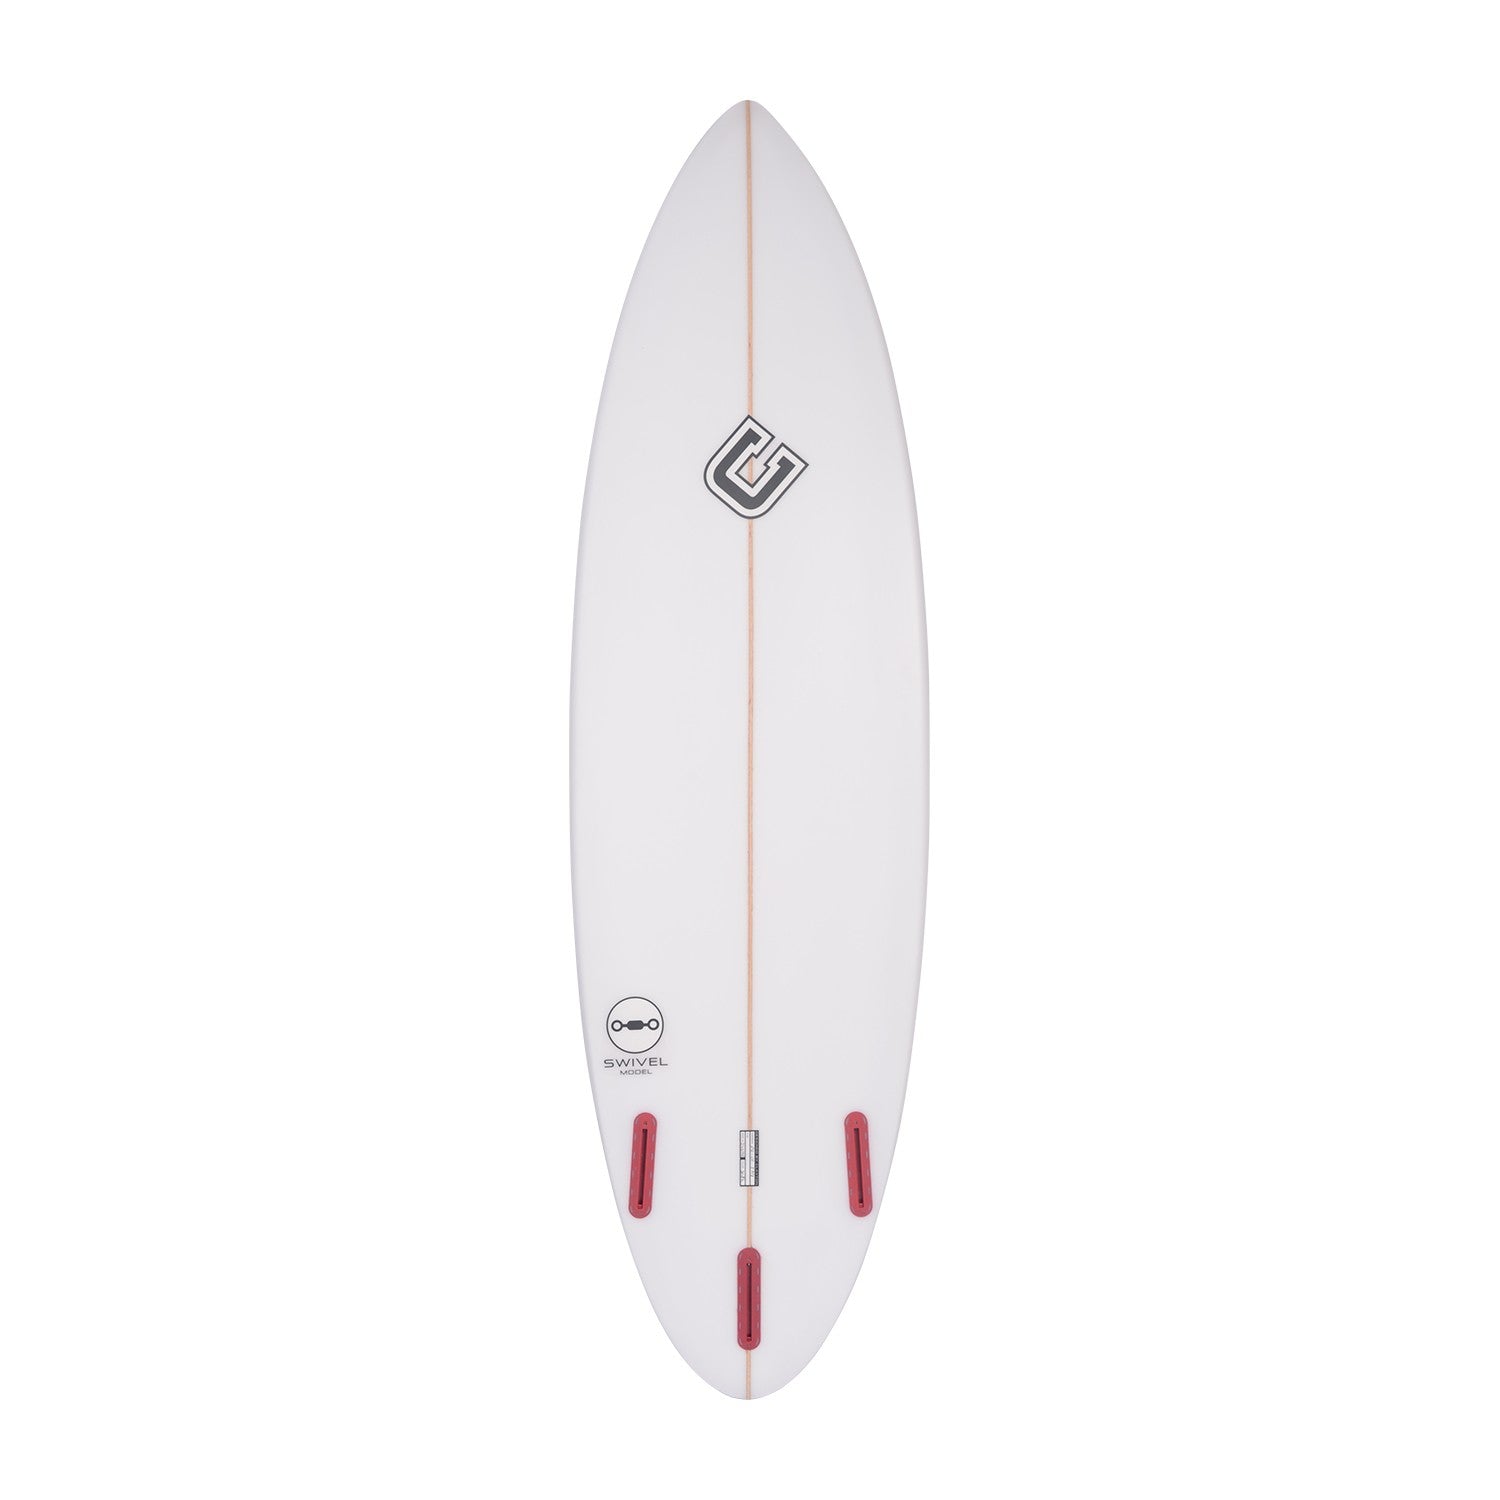 CLAYTON Surfboards - Swivel (PU) Futures - 6'0